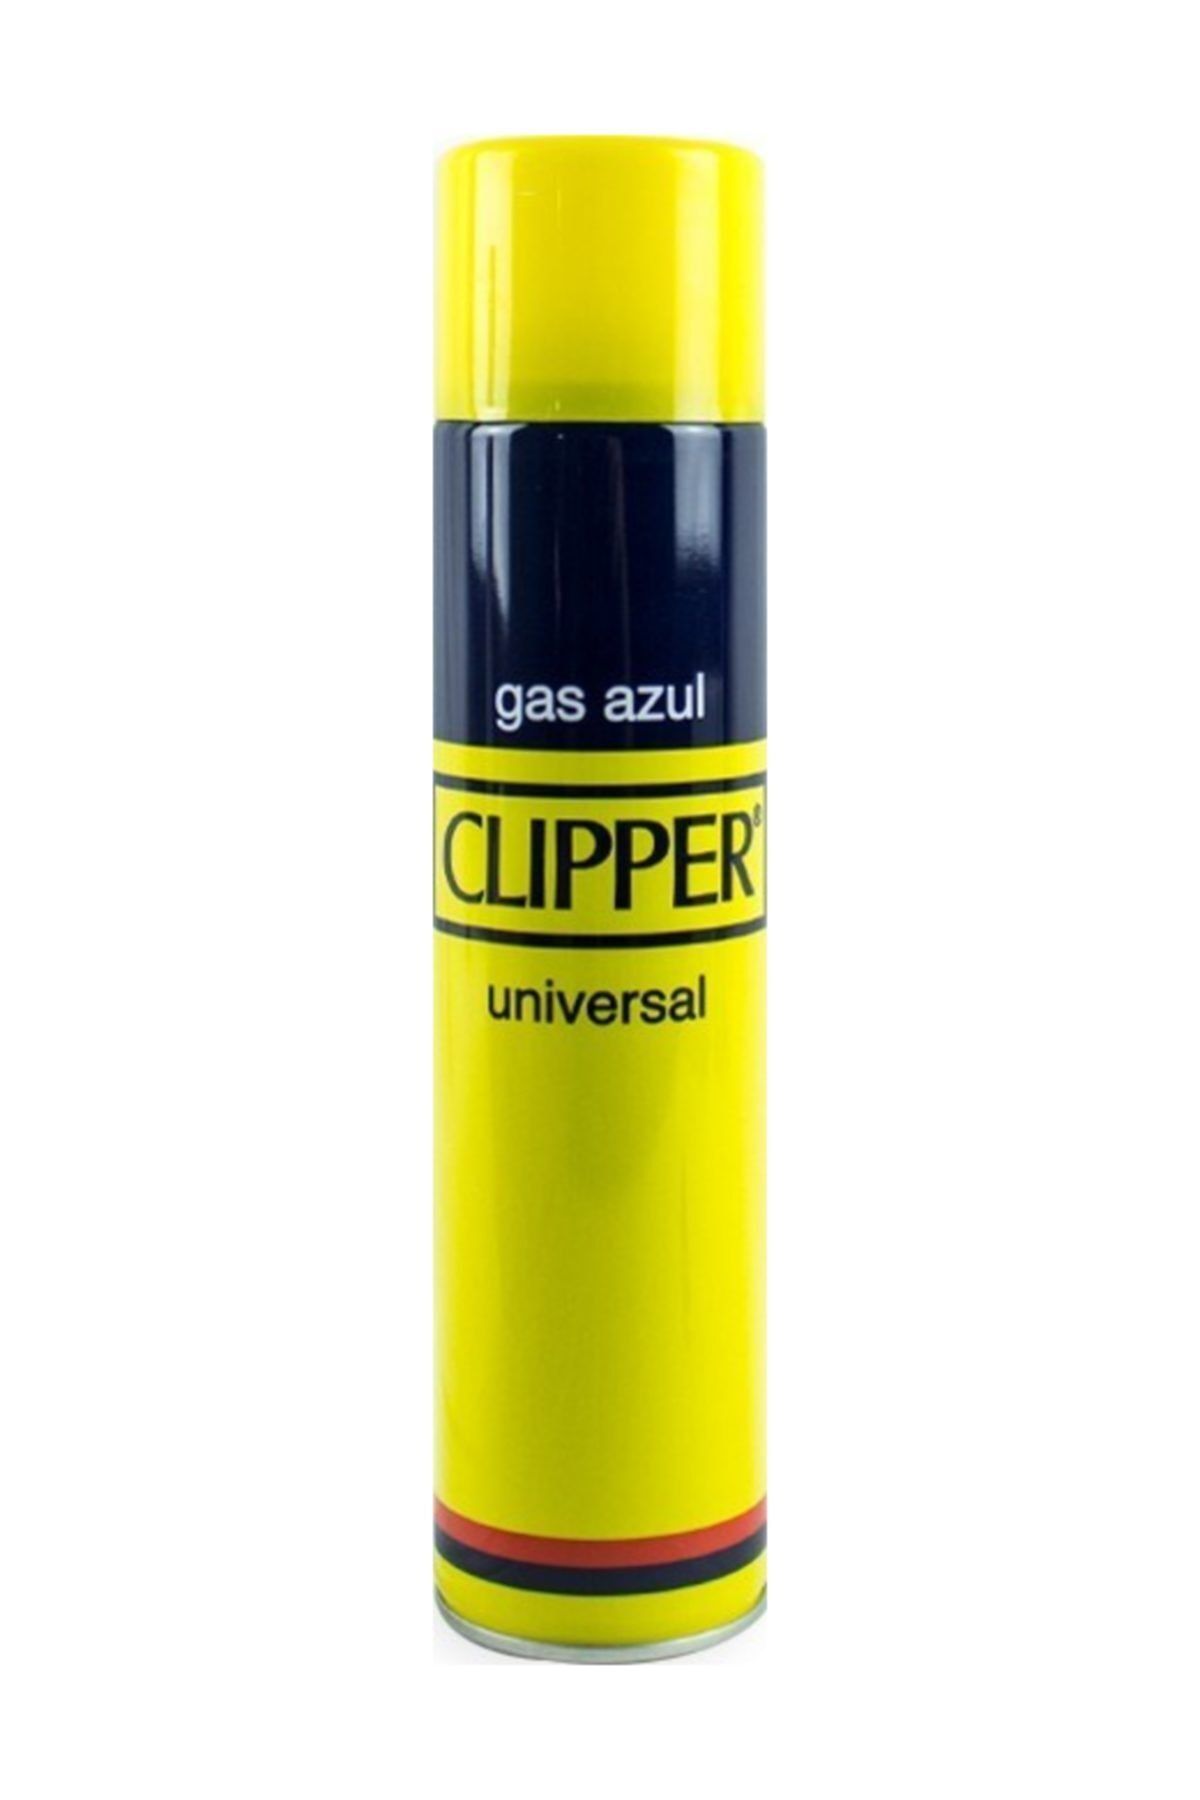 Clipper Çakmak Gazı 250 Ml 140 gr